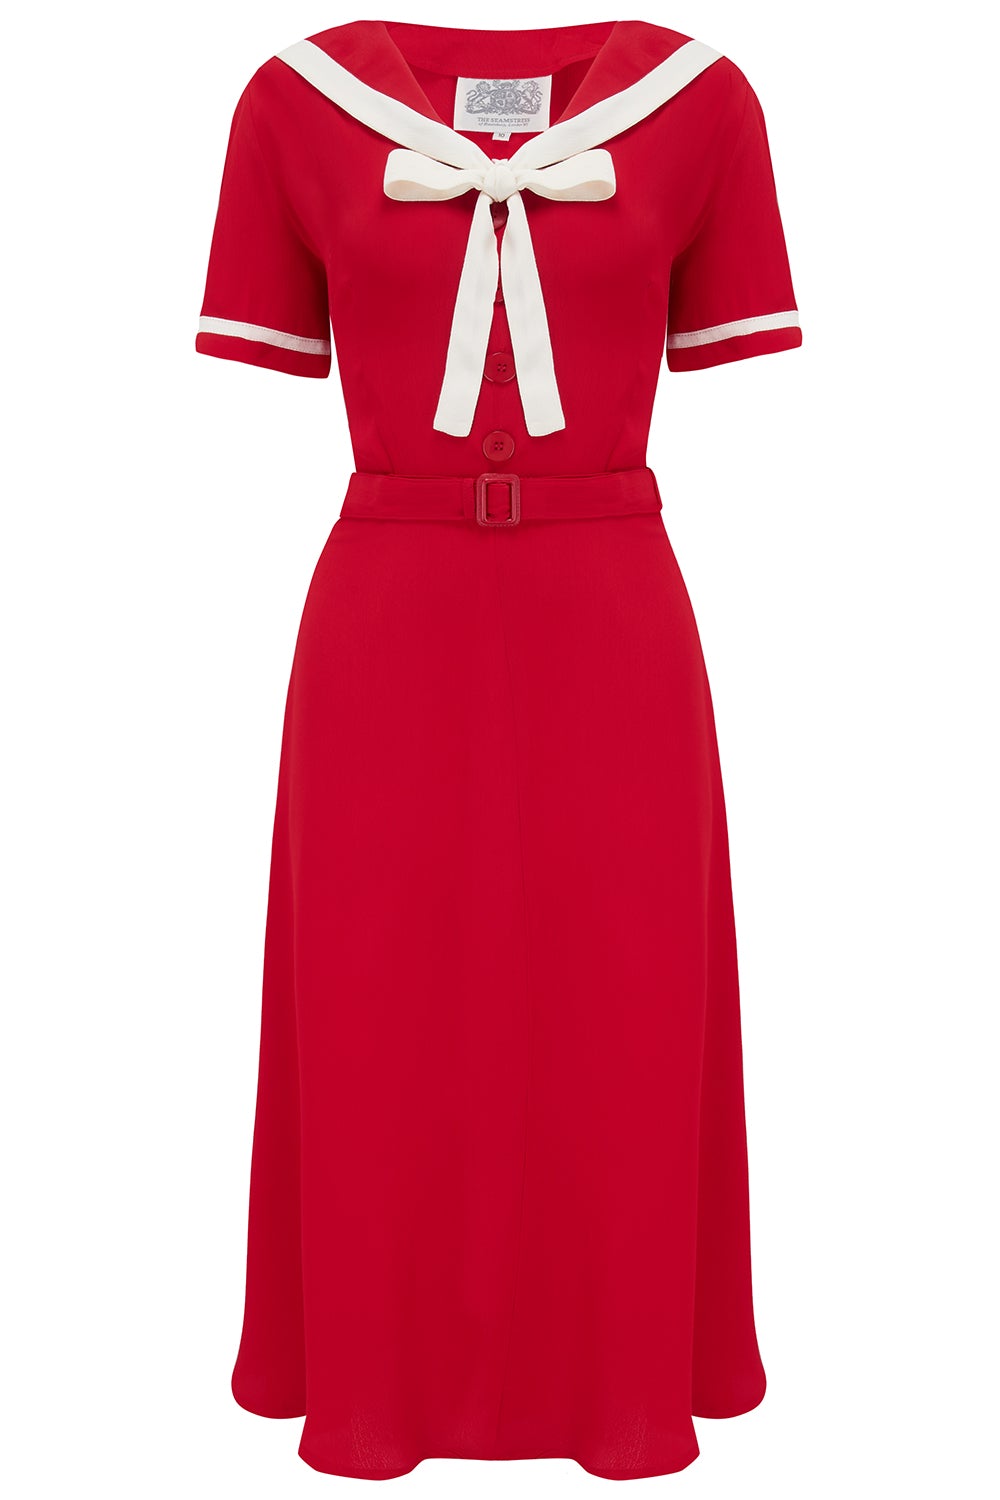 1930s Dresses | 30s Art Deco Dress Patti 1940s Nautical Sailor Dress in Red Authentic true vintage style £79.01 AT vintagedancer.com